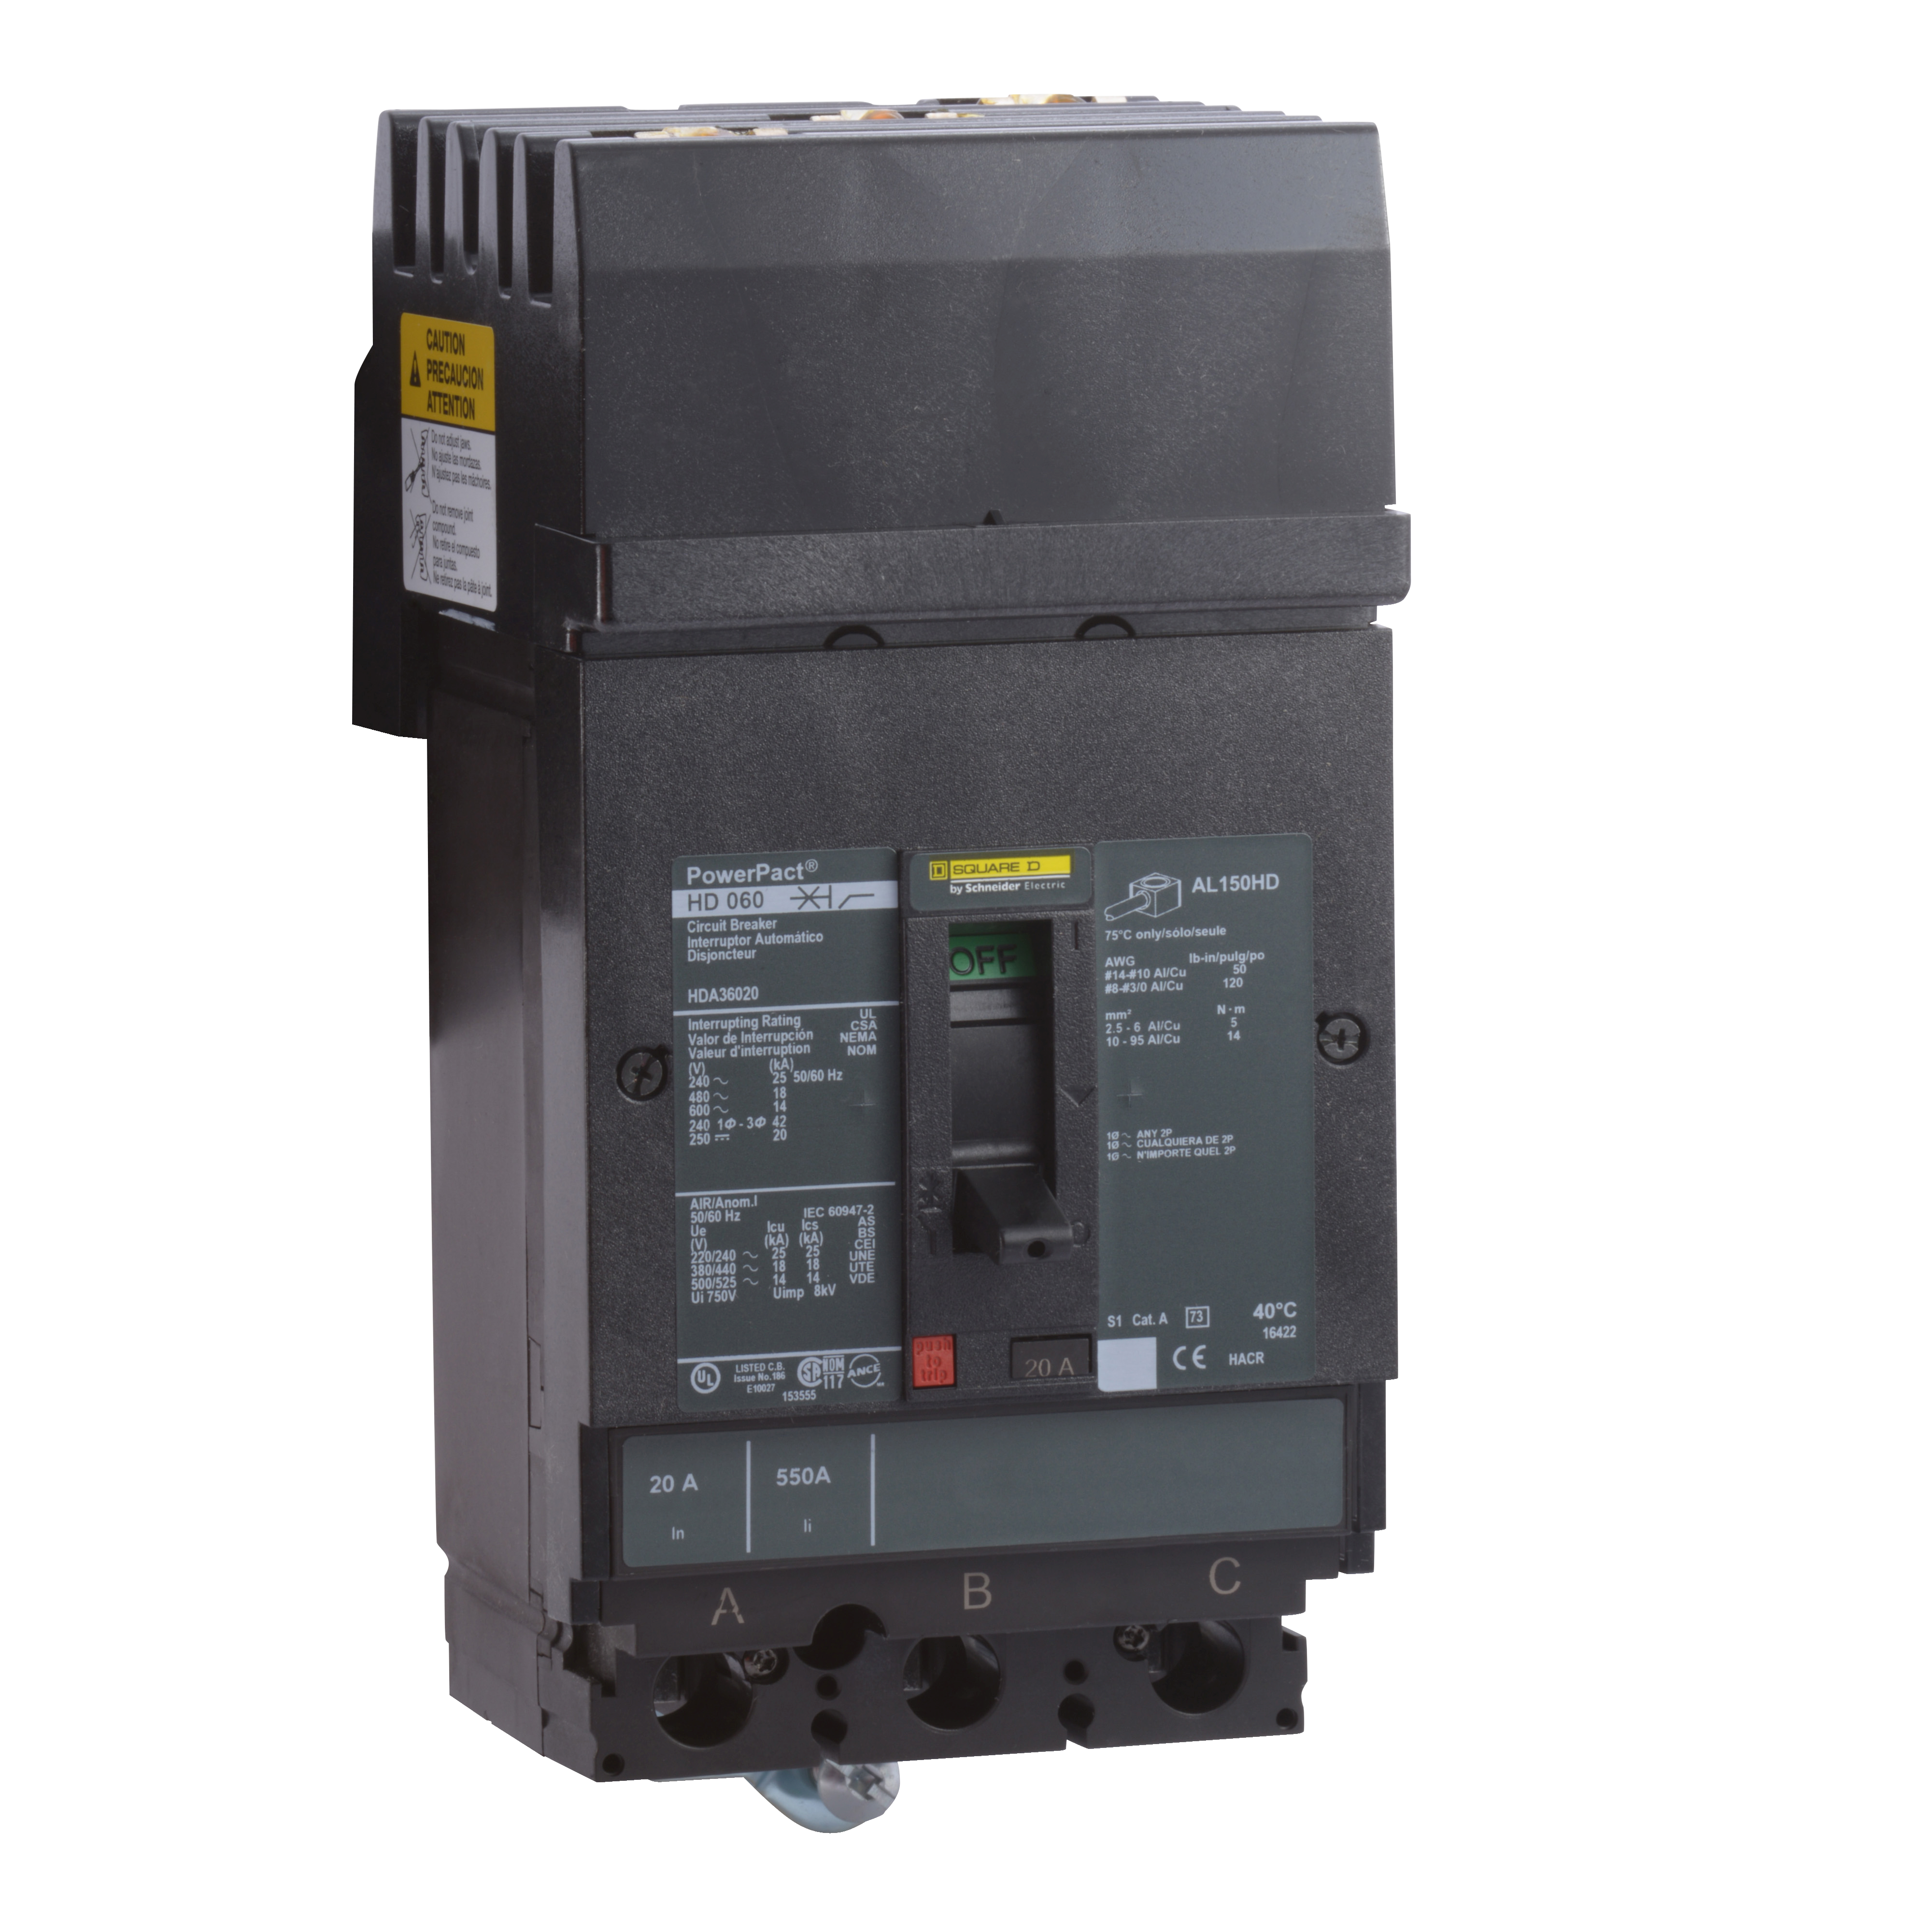 Circuit breaker, PowerPacT H, 60A, 3 pole, 600VAC, 14kA, I-Line, thermal magnetic, 80%, CBA